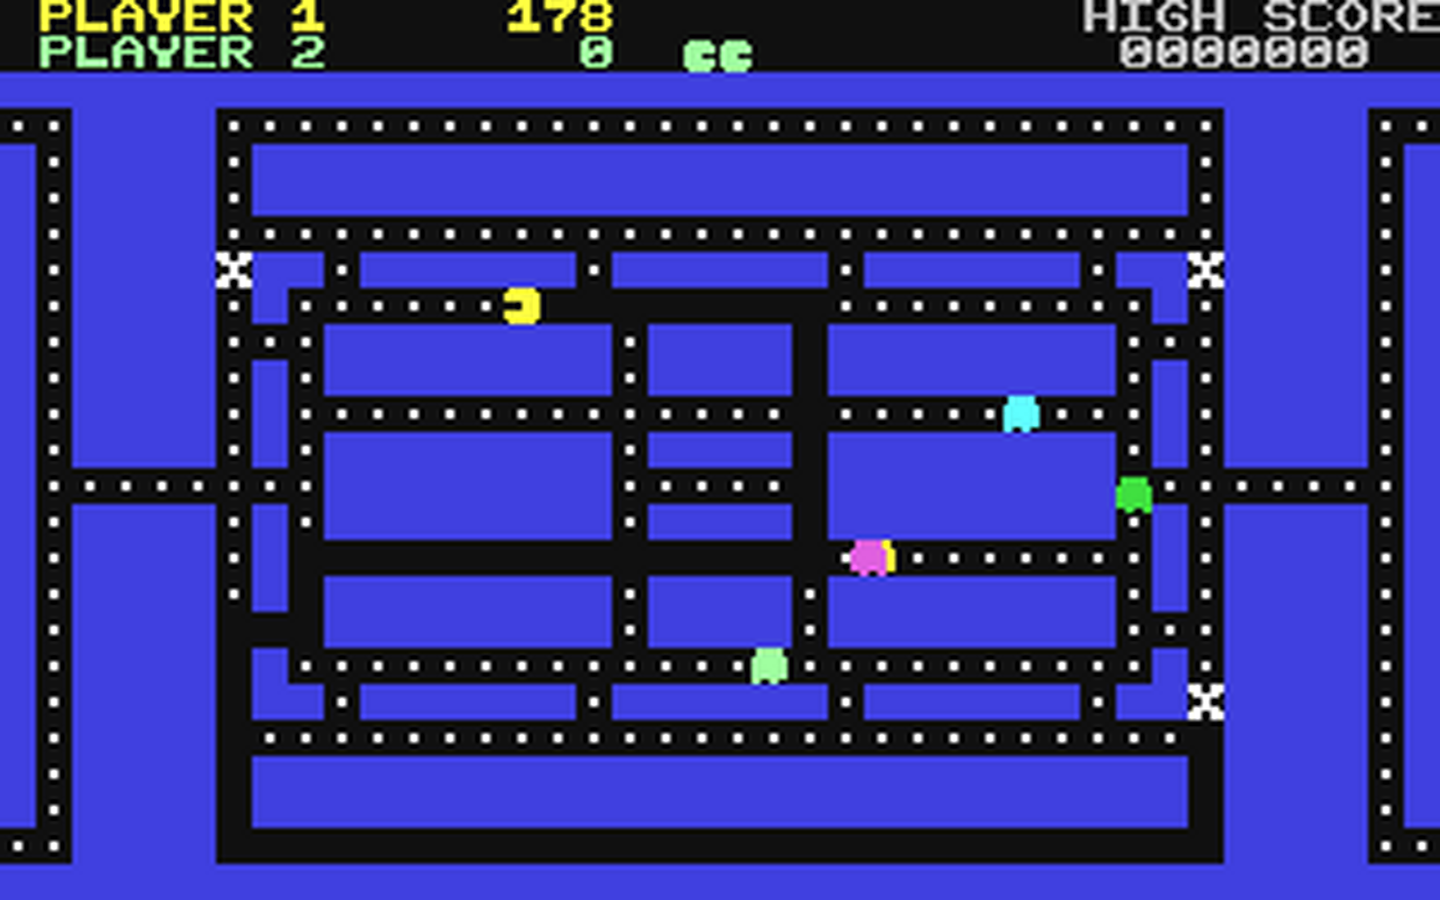 C64 GameBase Chomper_Man Victory_Software 1983